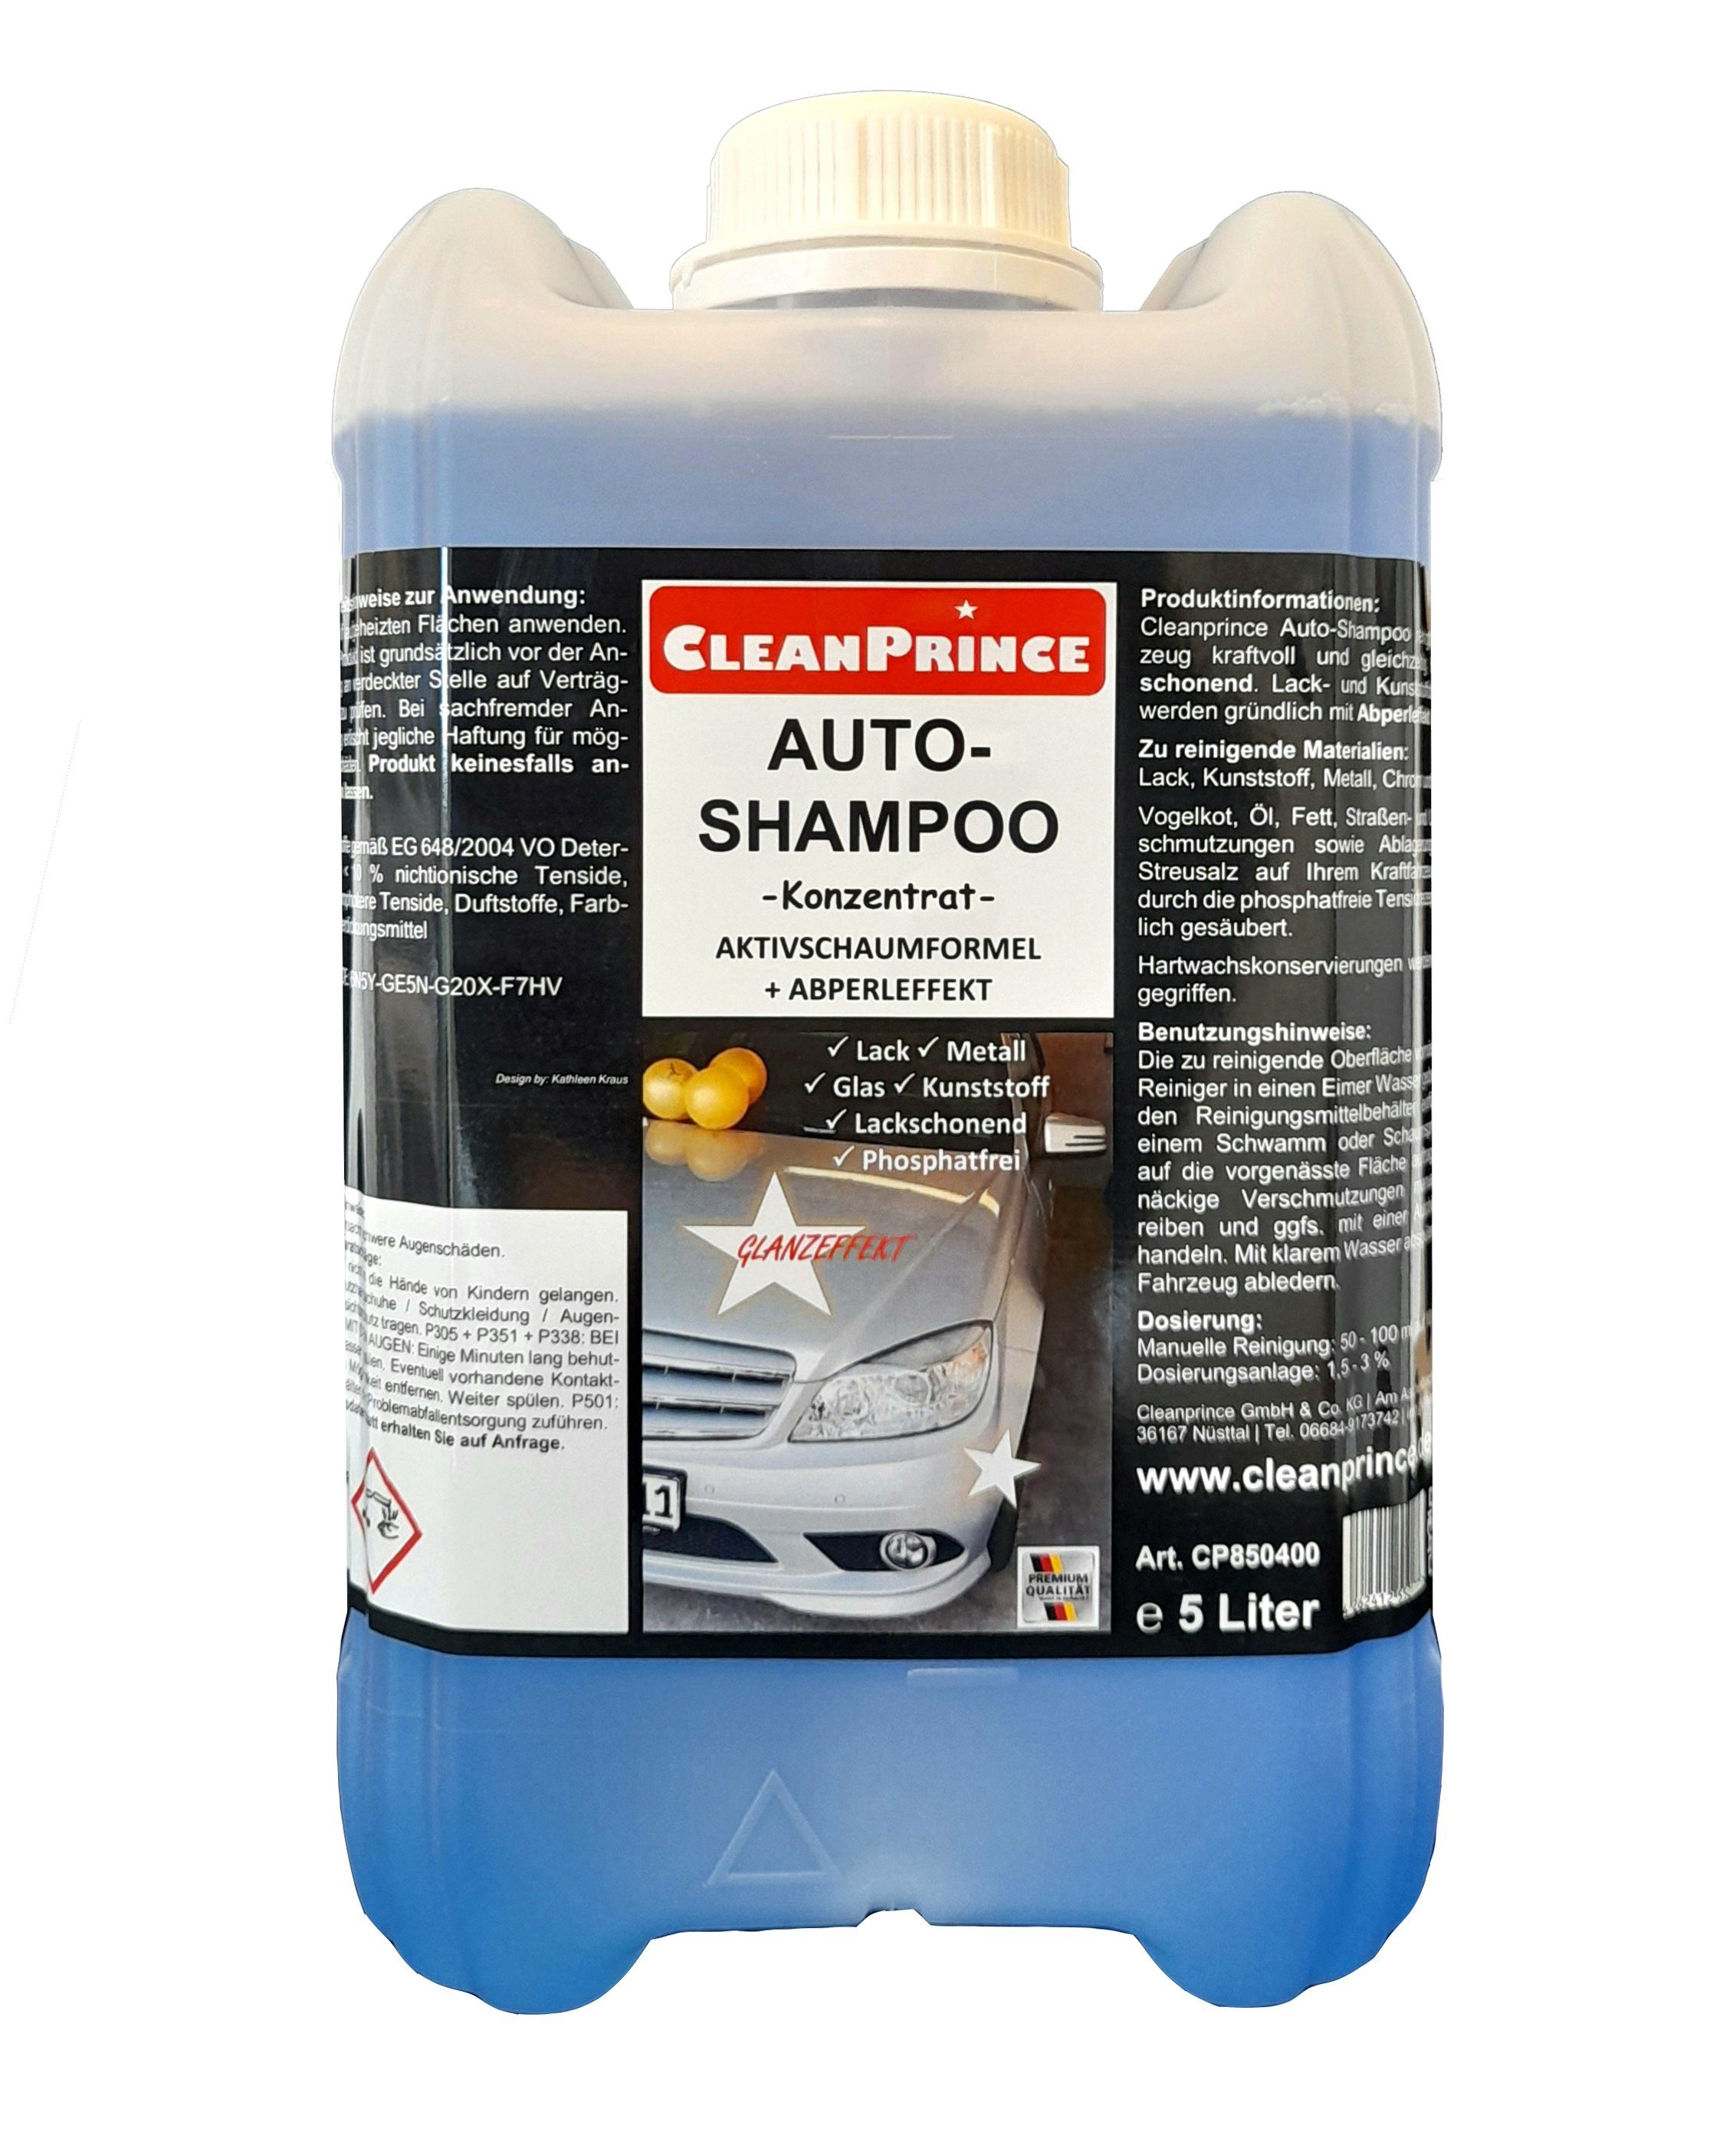 CleanPrince Autoshampoo Konzentrat Aktivschaum Auto Kfz Reinigungsmittel Auto-Reinigungsmittel